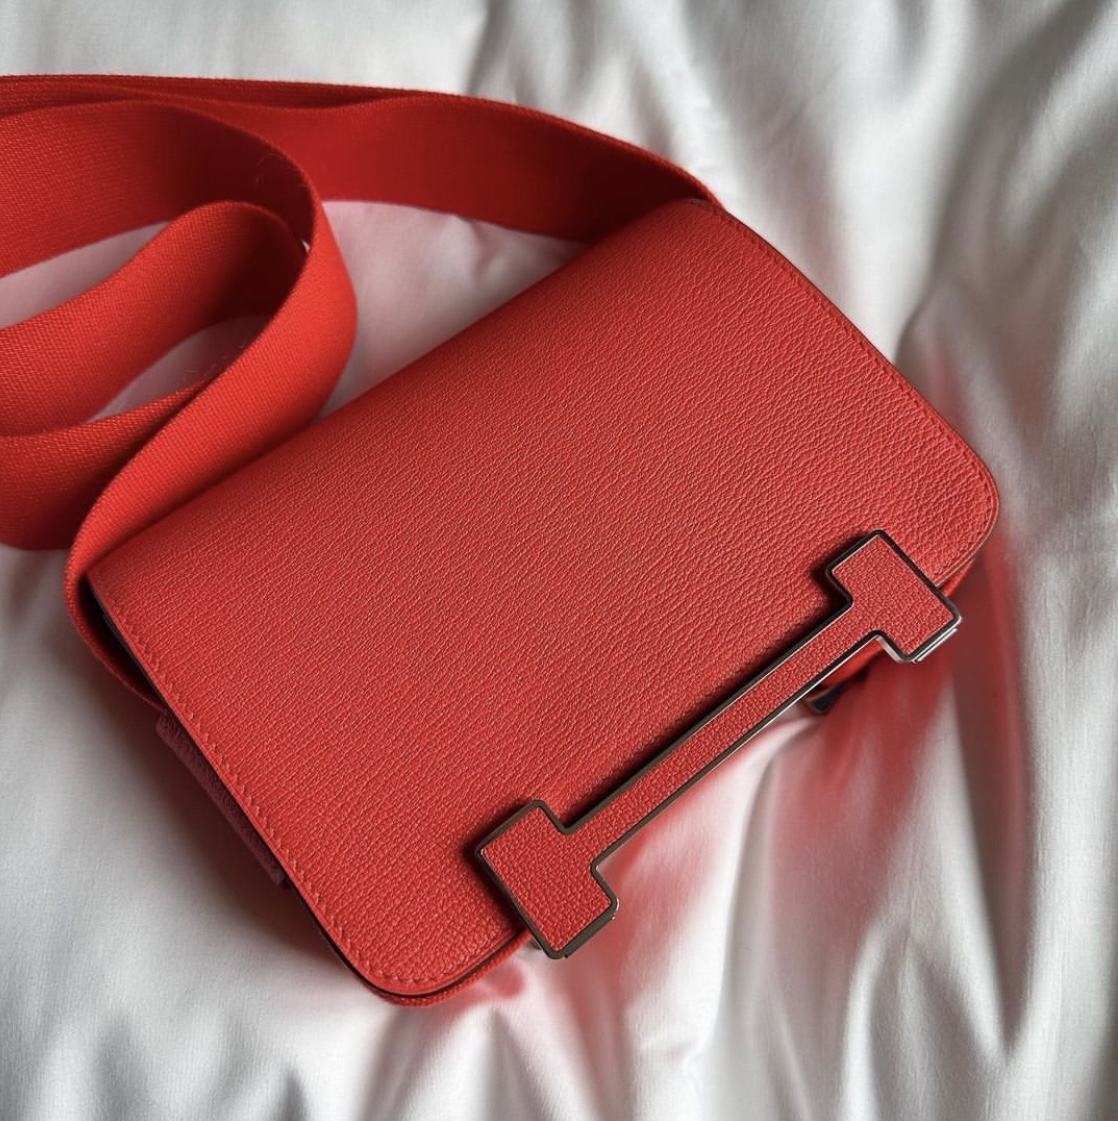 The Most Sought-After Hermès Mini Bags